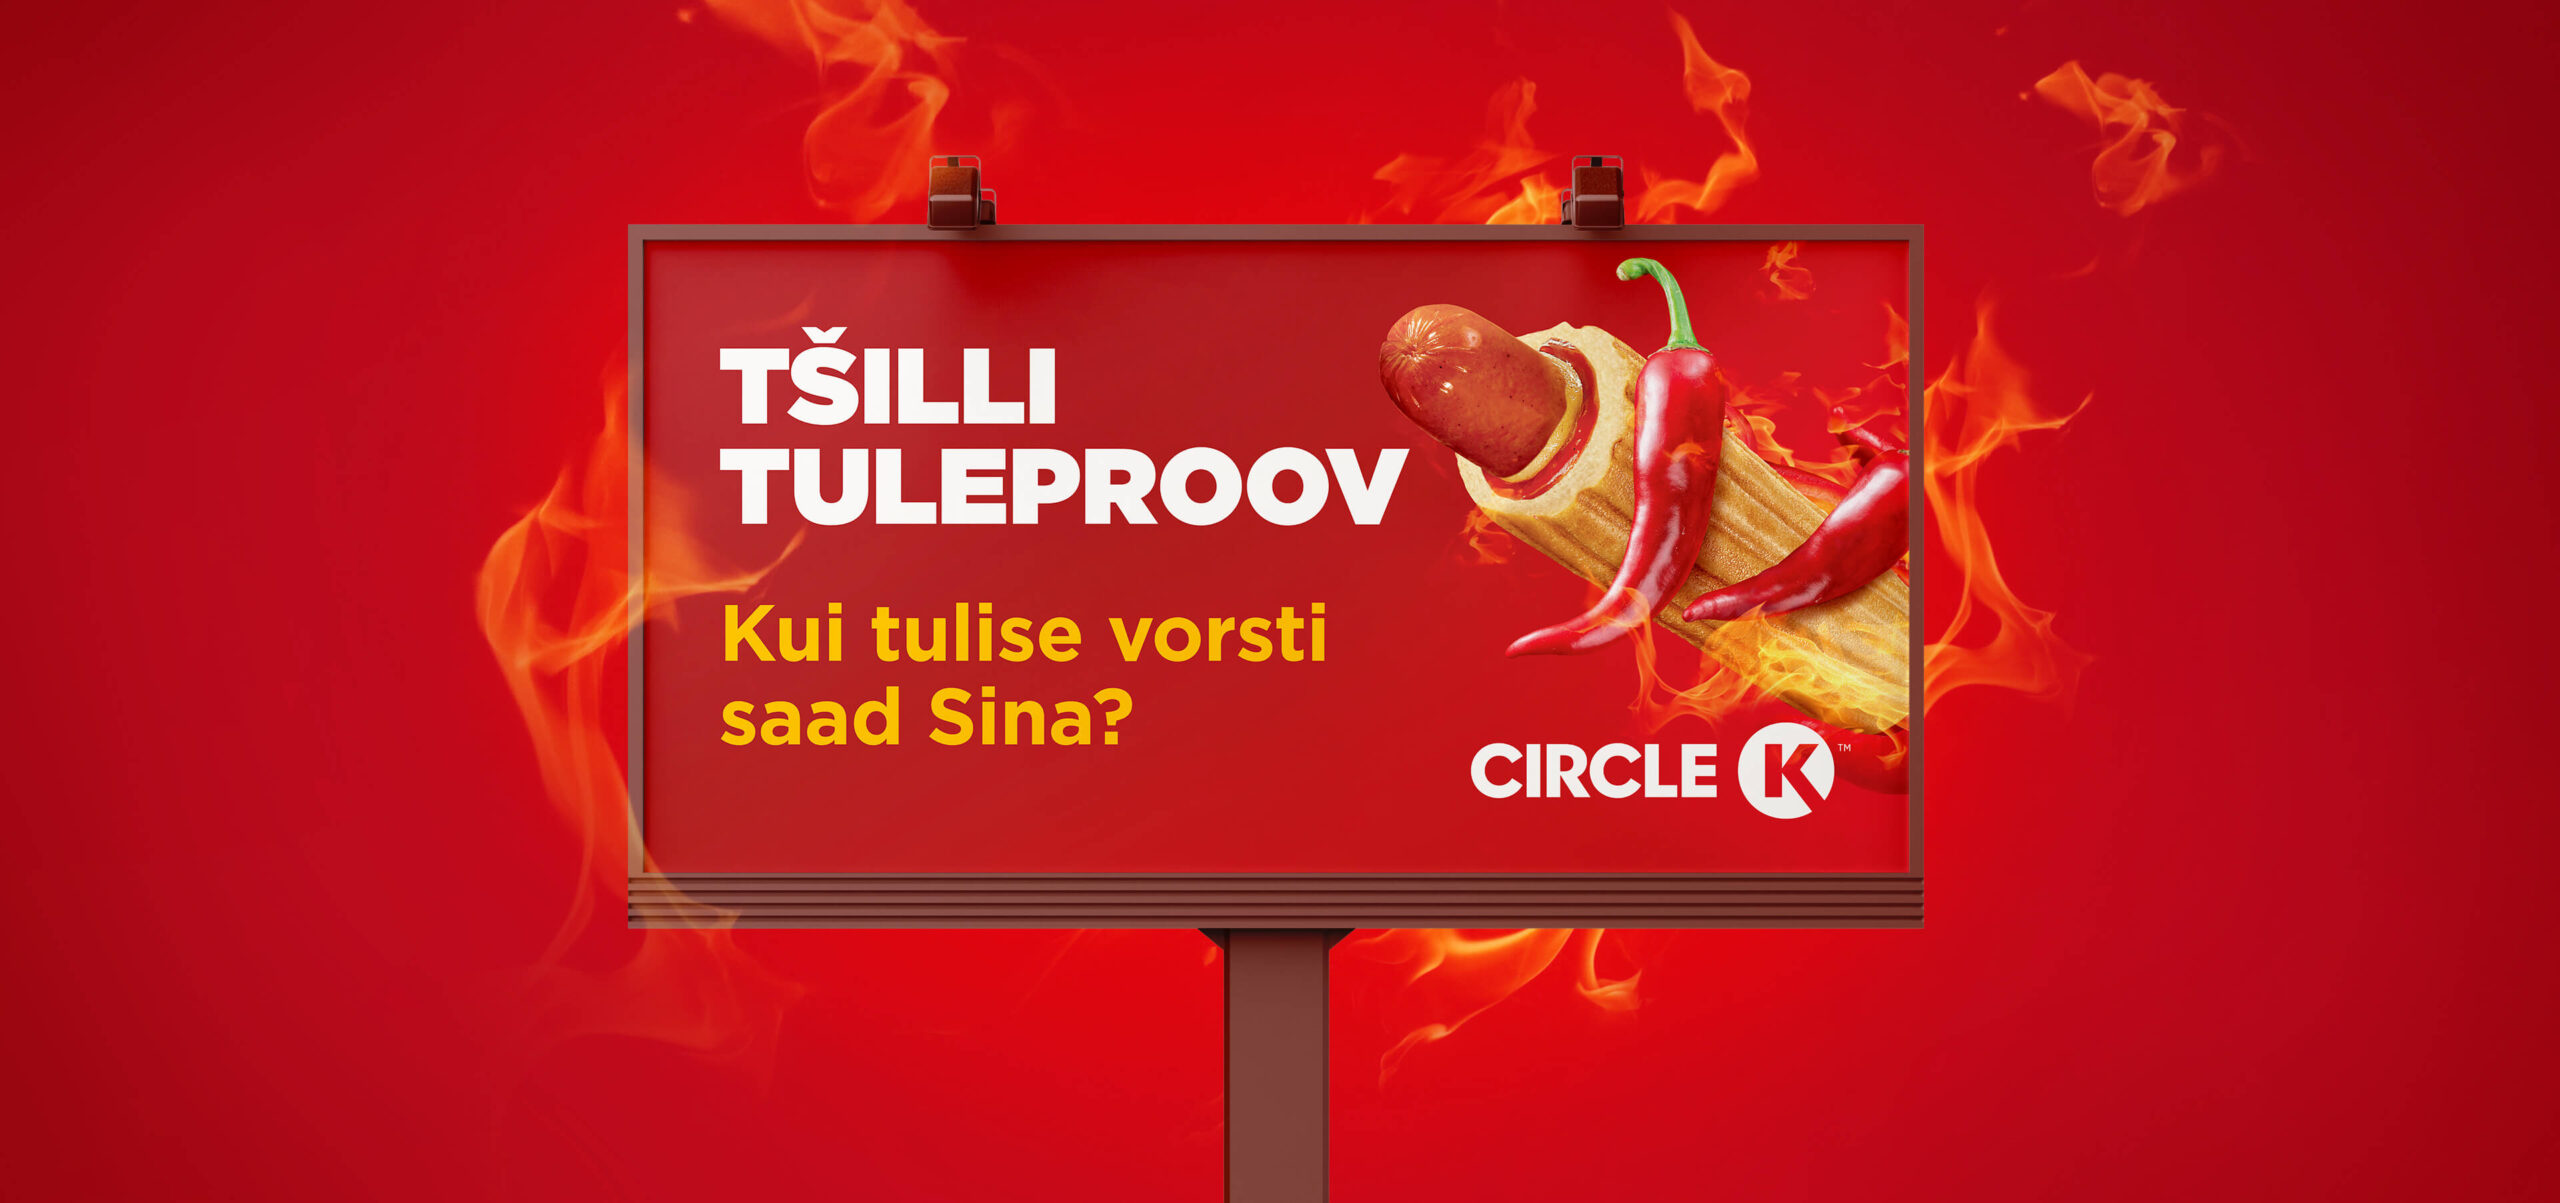 Circle K playful campaign key visual.